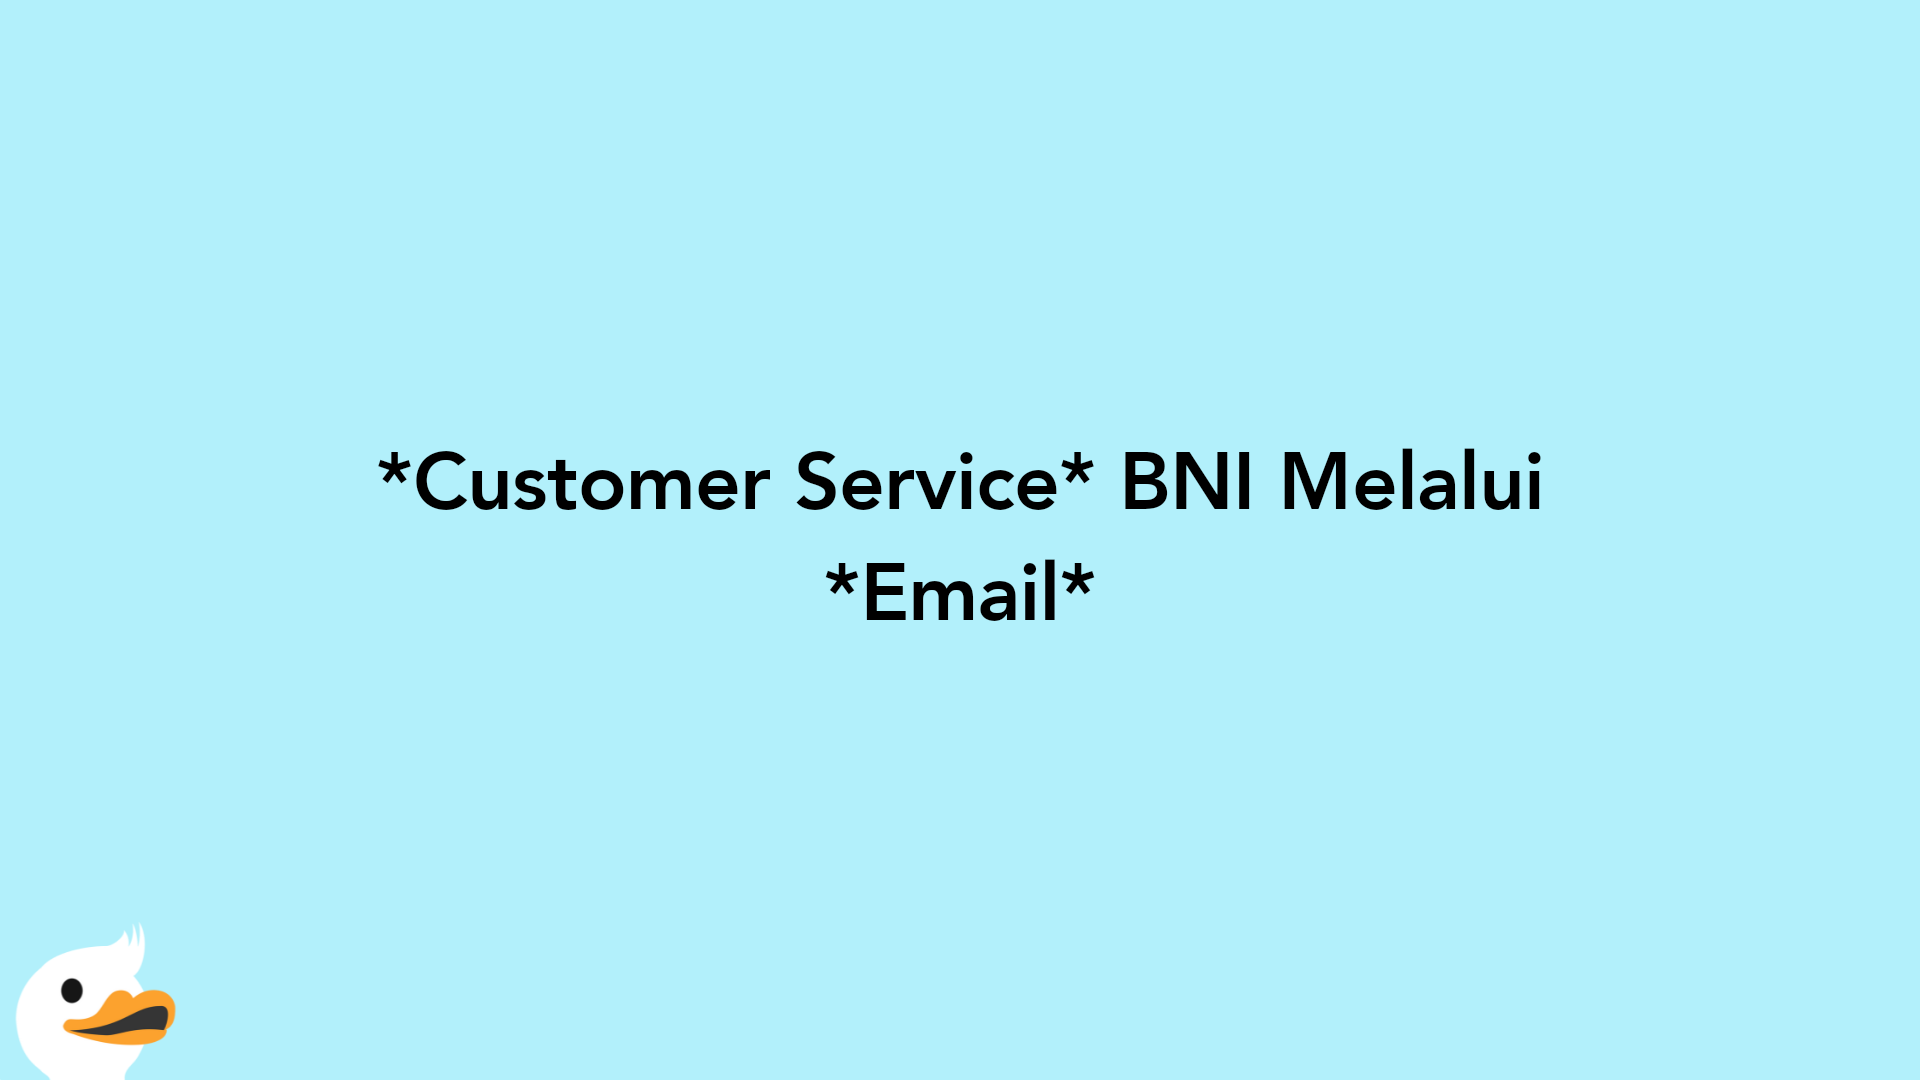 Customer Service BNI Melalui Email